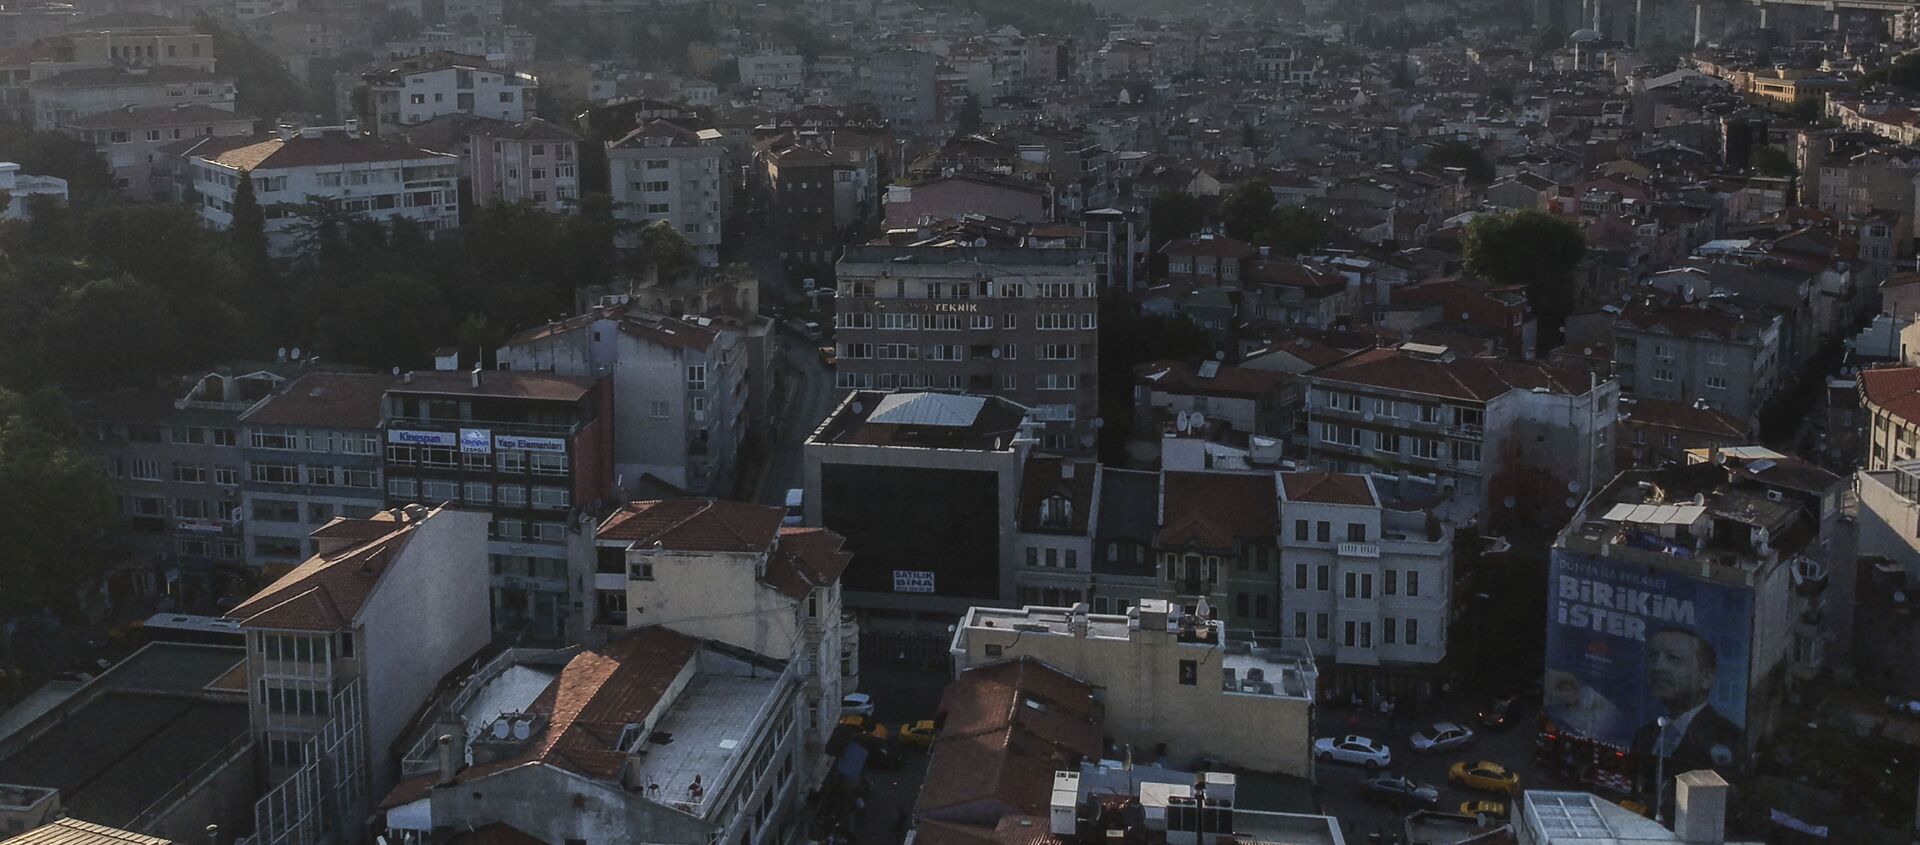 Вид на город Стамбул, фото из архива - Sputnik Азербайджан, 1920, 21.10.2020